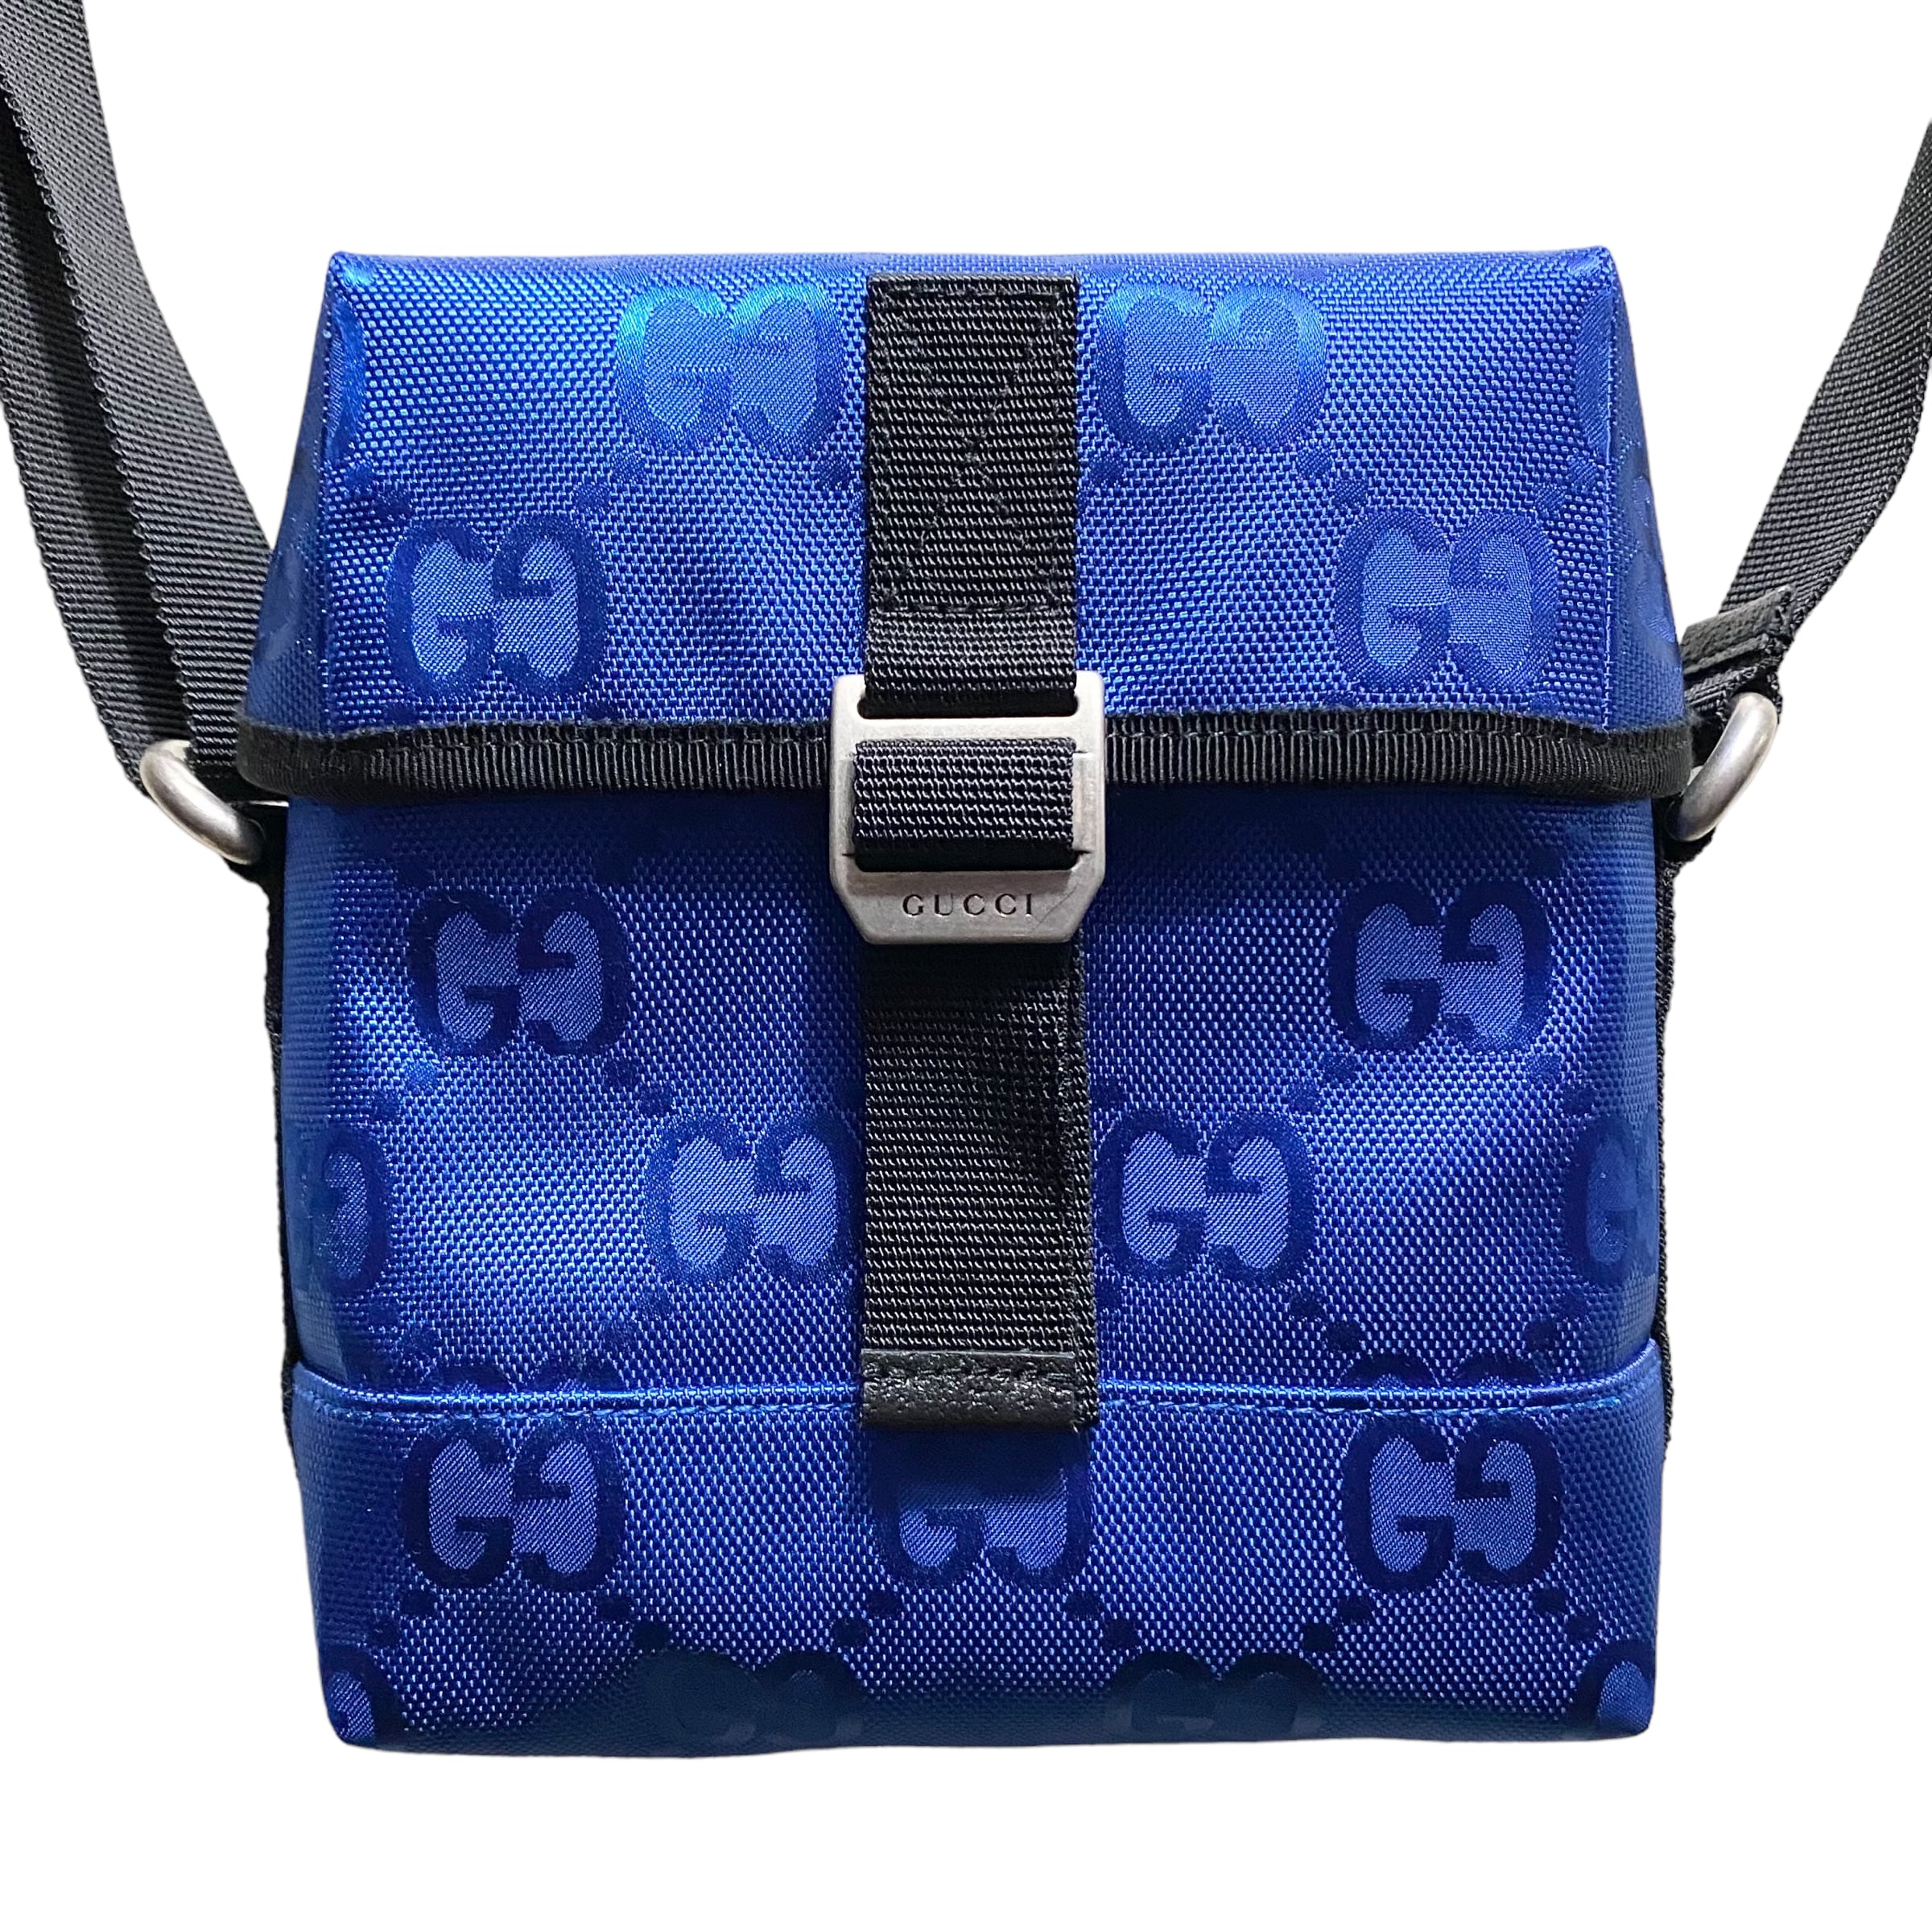 GUCCI nylon messenger bag “off the grid” | NOIR ONLINE